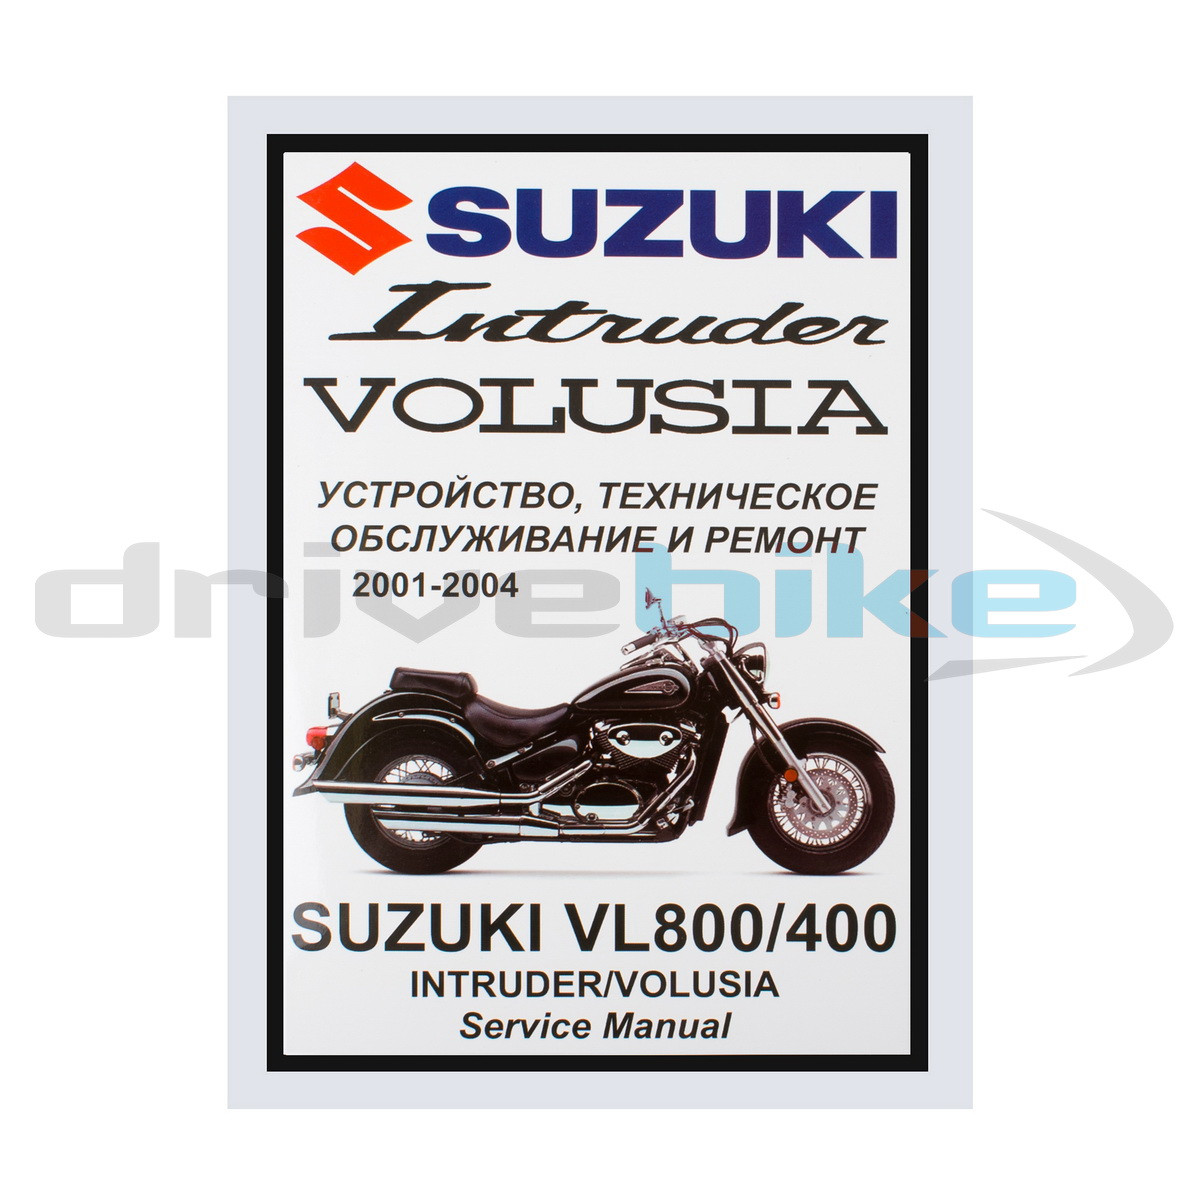 Мануалы и документация для Suzuki VS 400 Intruder